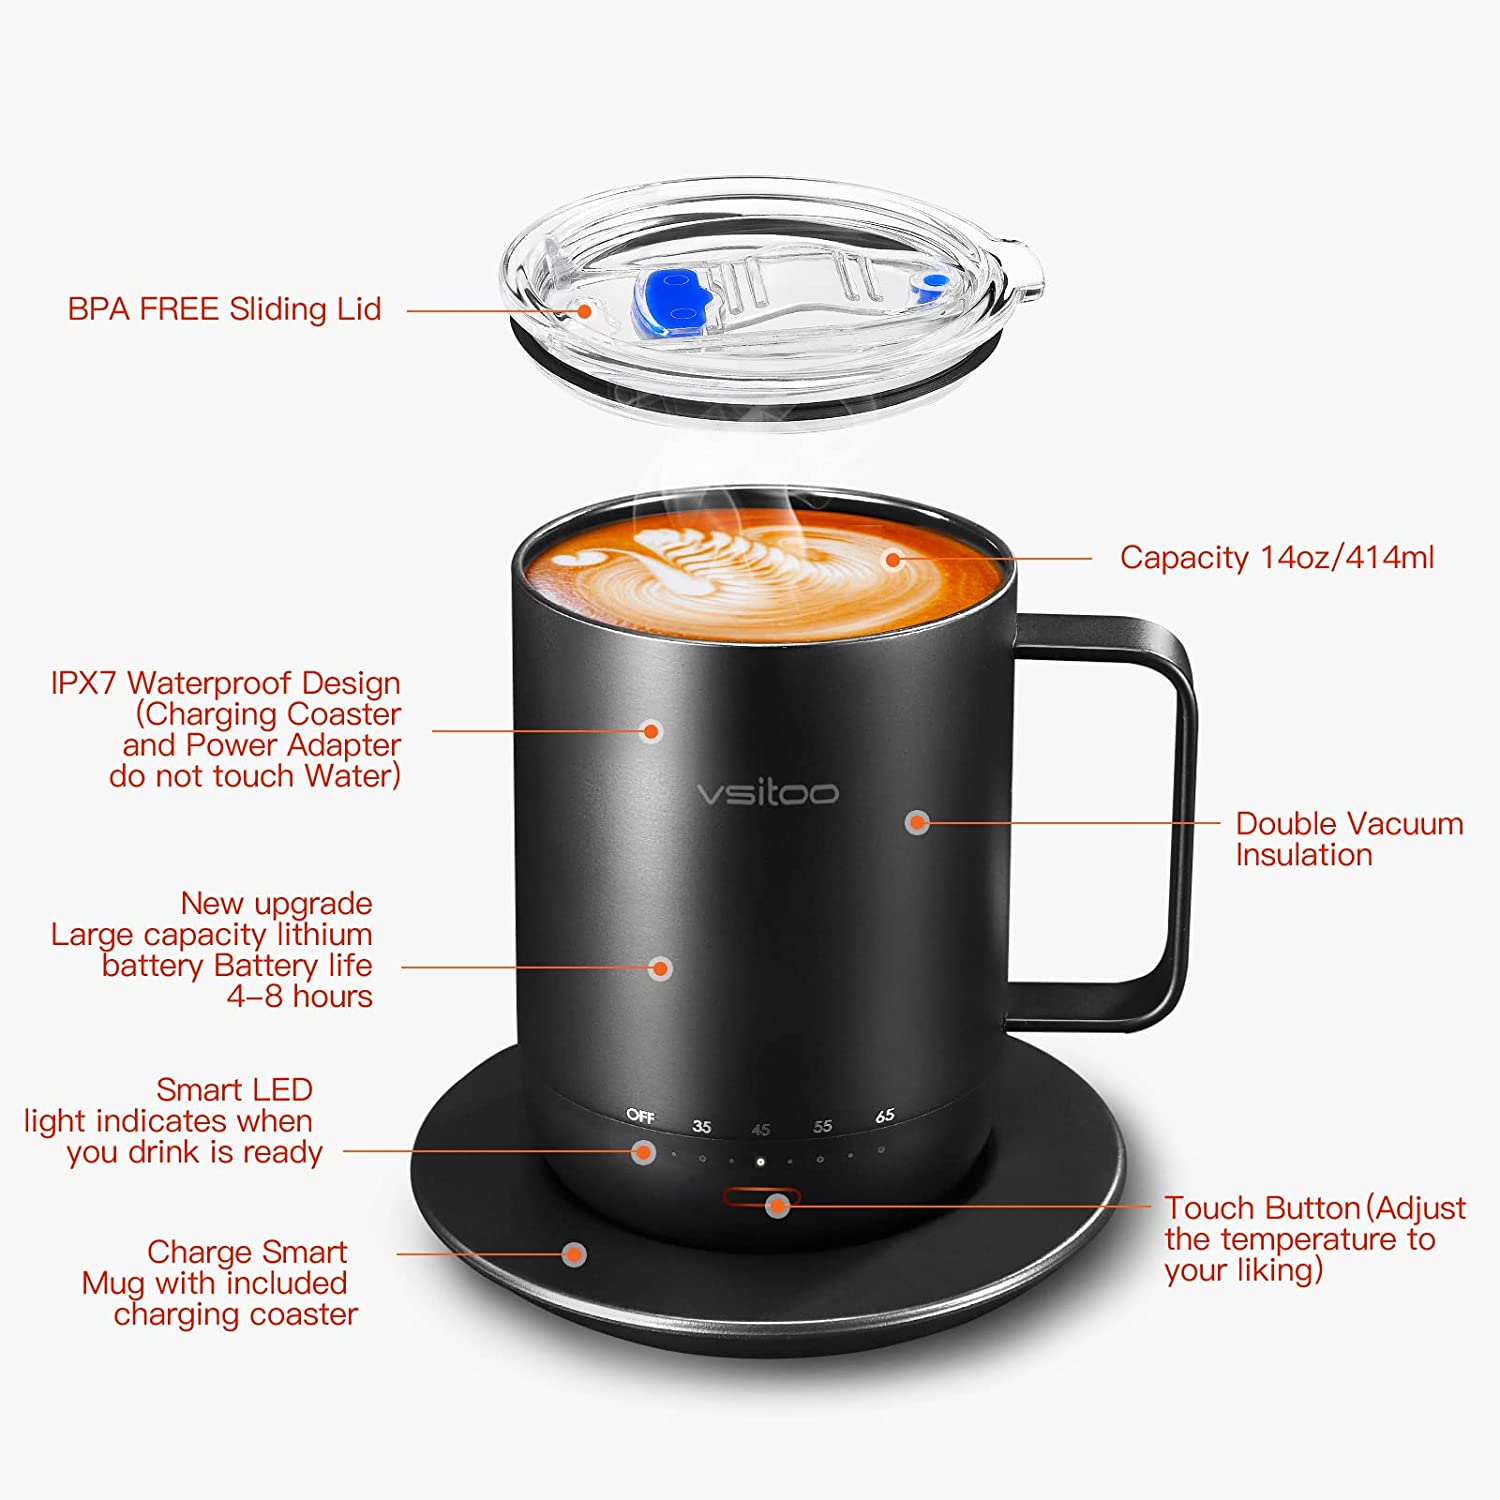  vsitoo S3 Temperature Control Smart Mug 2 with Lid